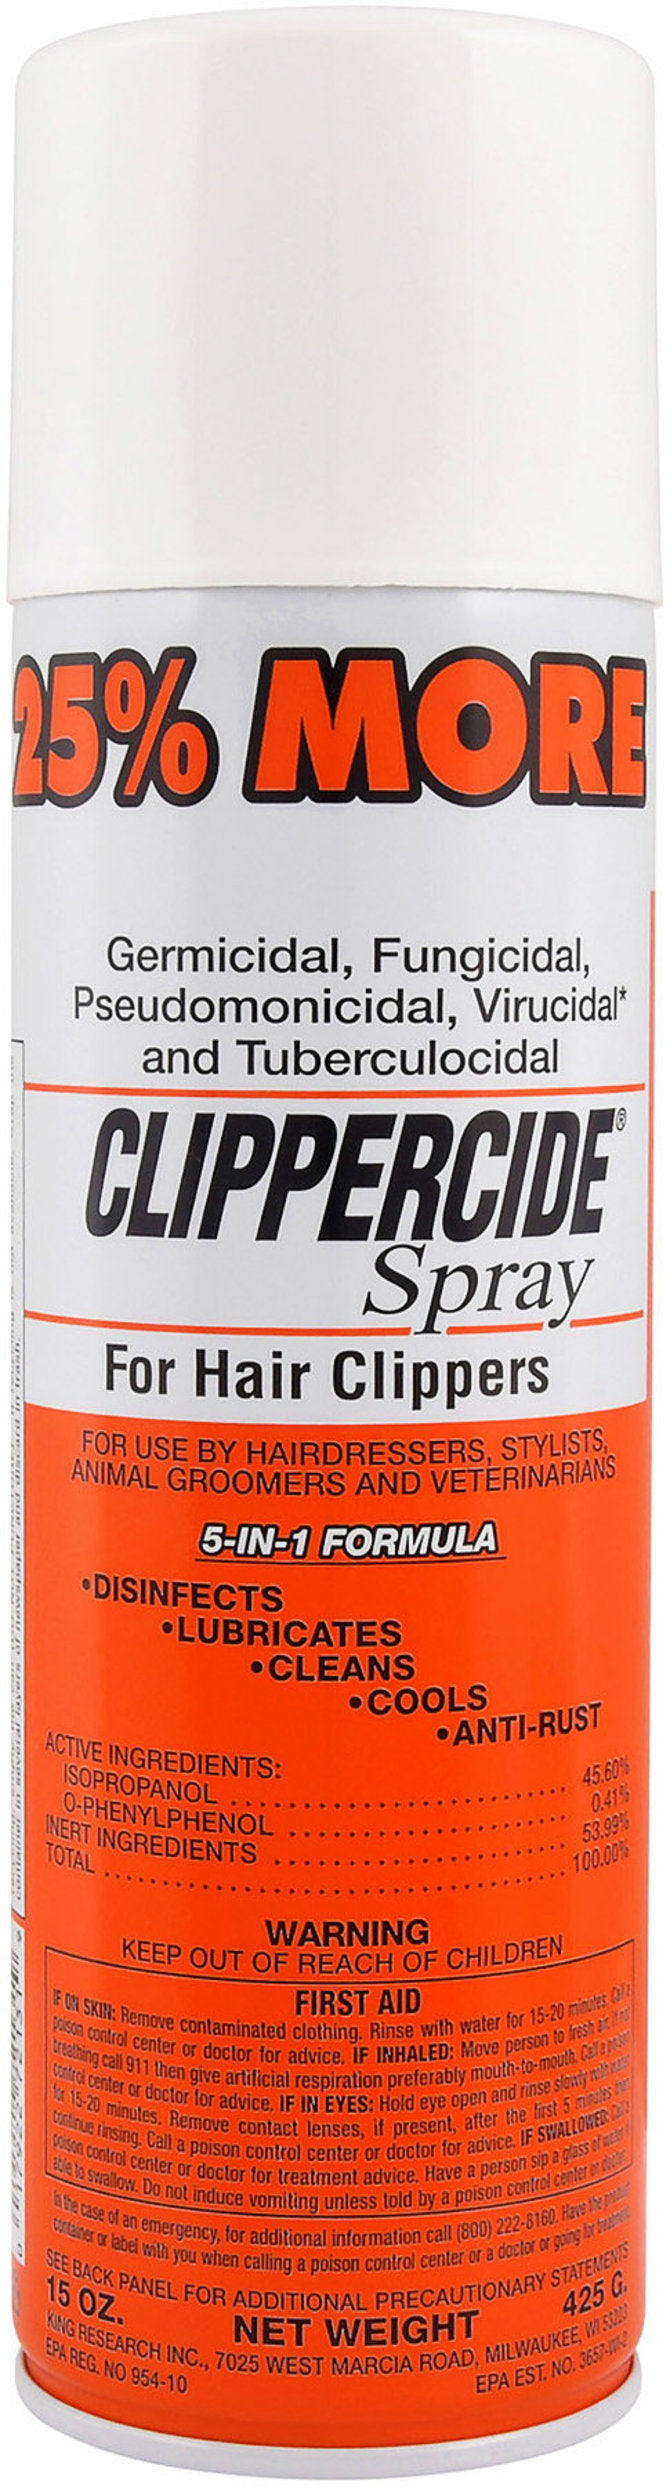 Clippercide 72130 Aerosol Spray, 15 Ounce